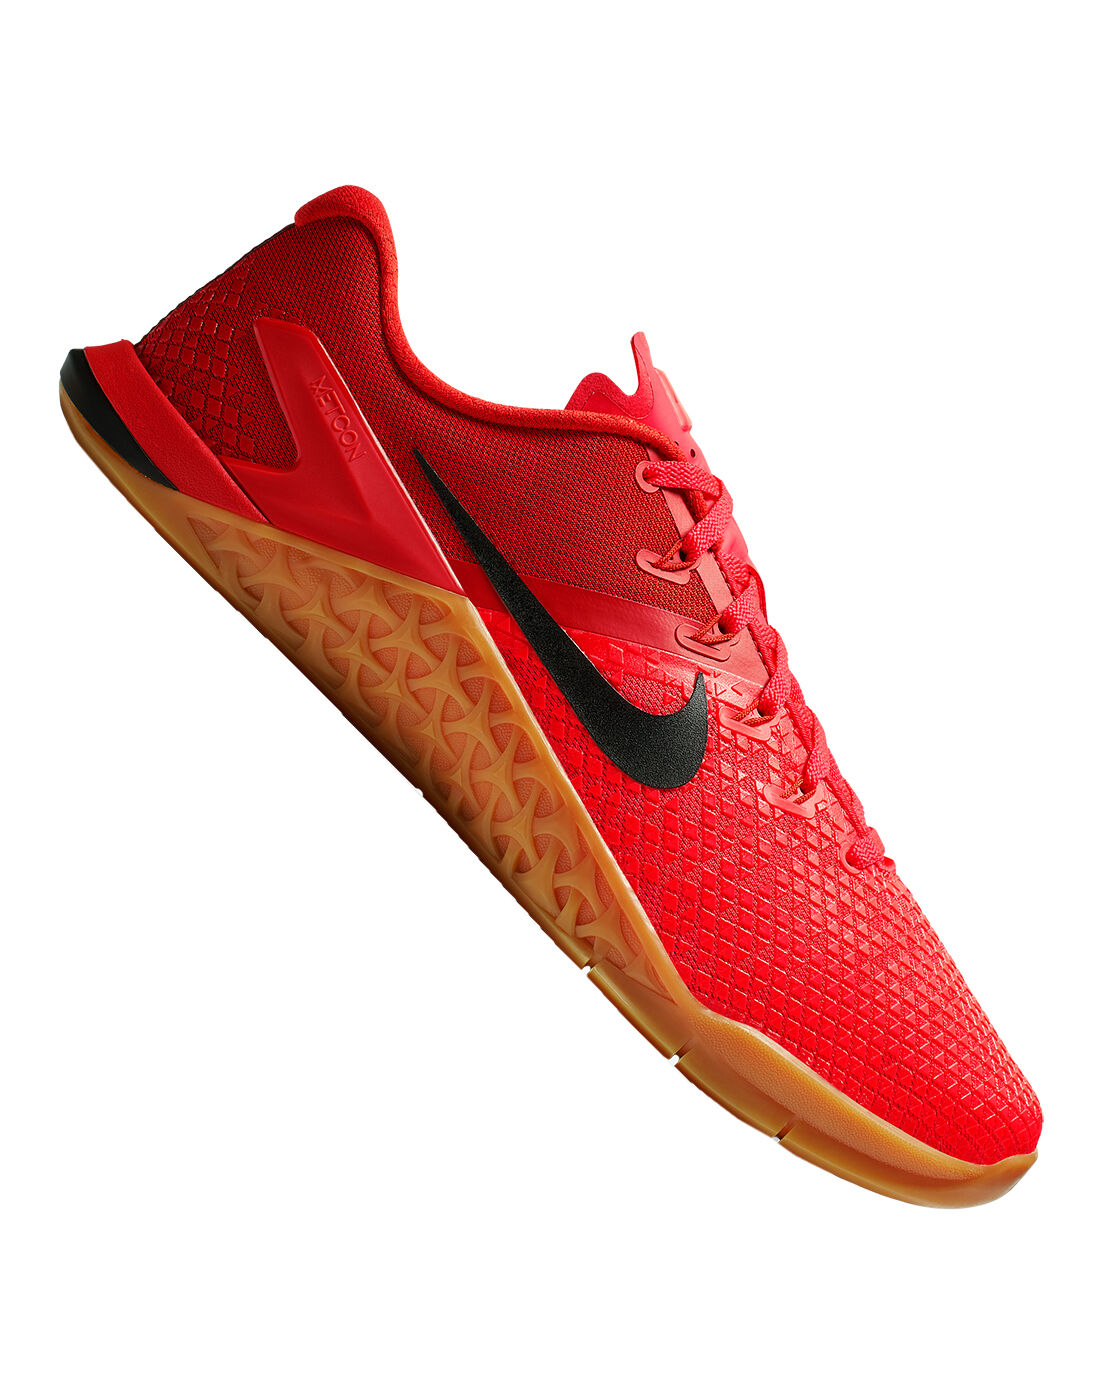 Men's Red Nike Metcon 4 XD | Life Style 